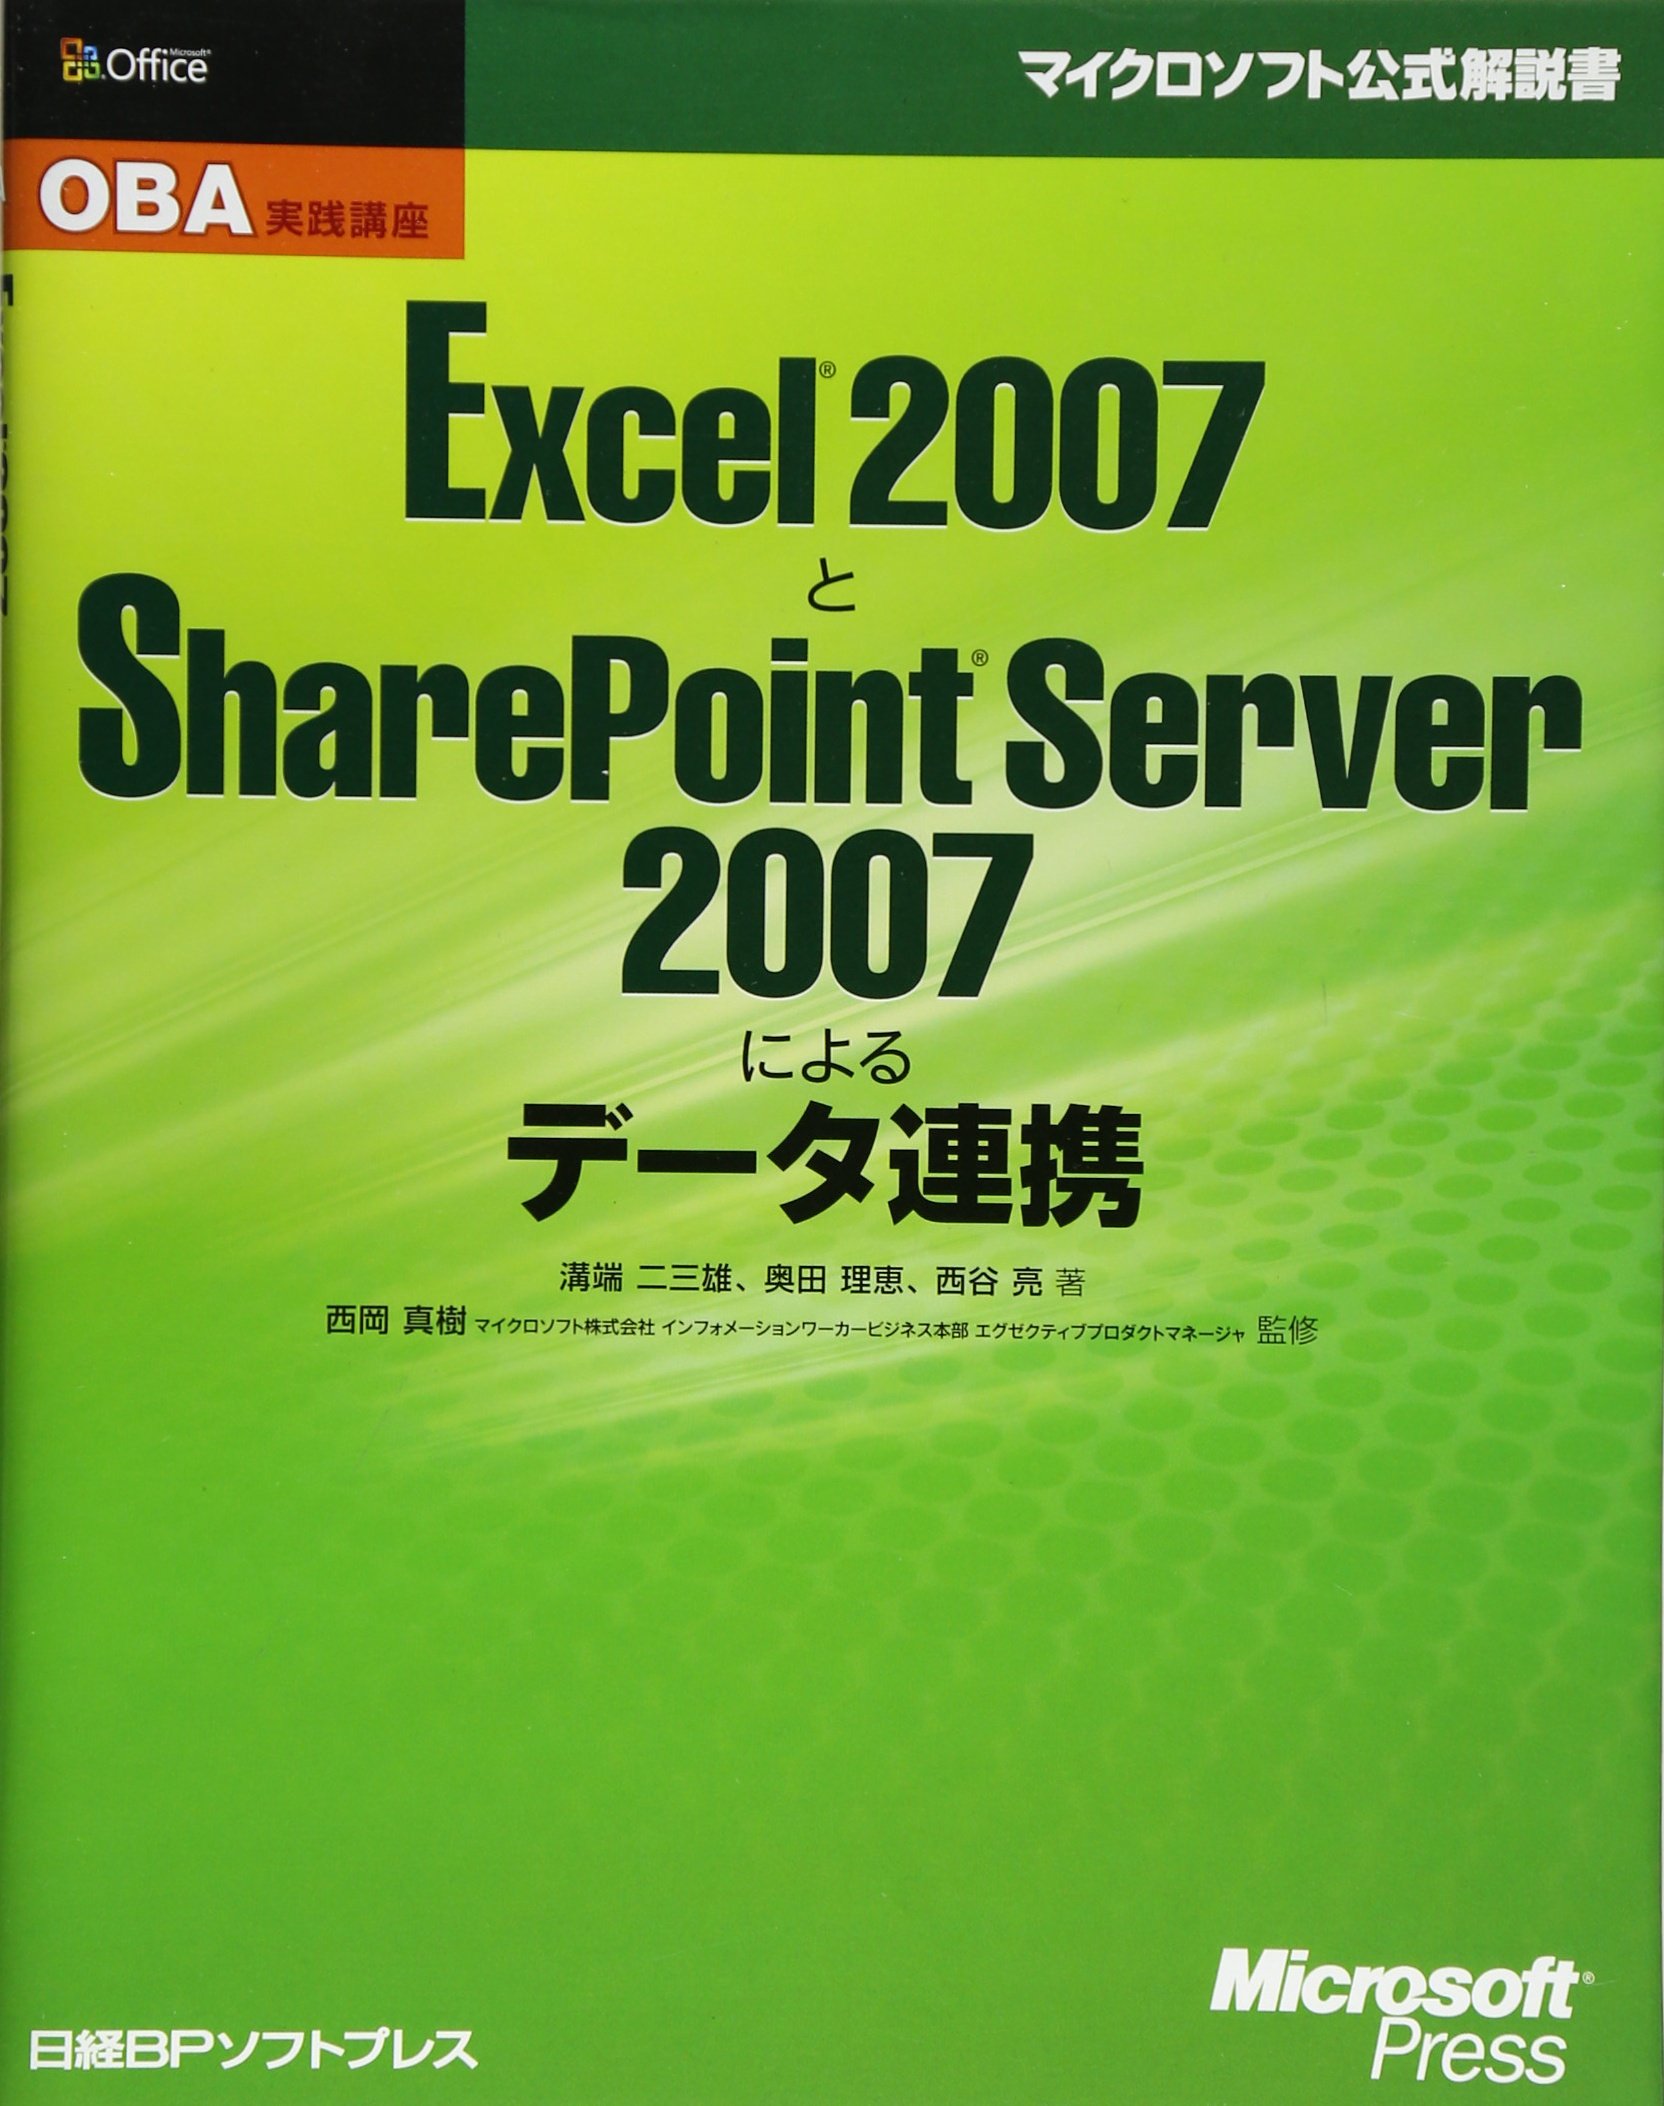 Excel 2007 と SharePoint Server 2007 によるデータ連携